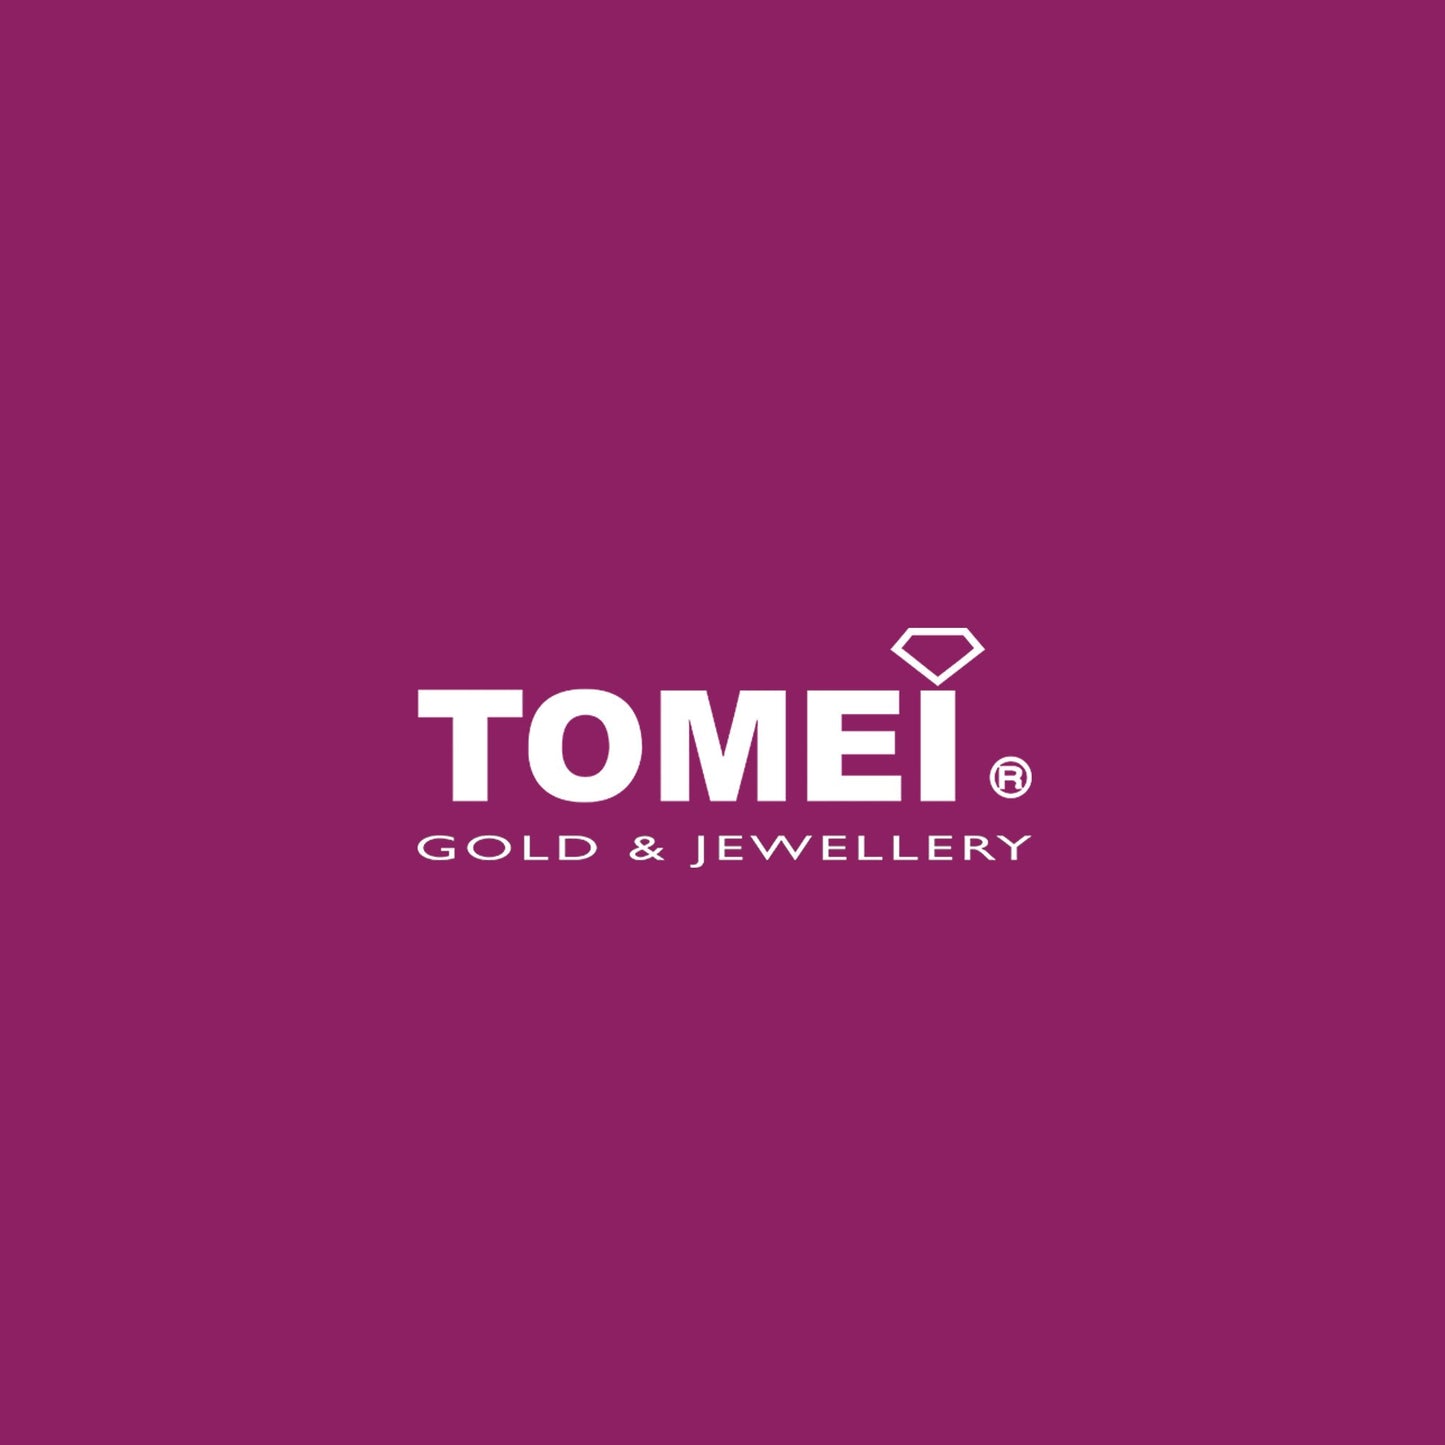 TOMEI Beads Bangle, Yellow Gold 916